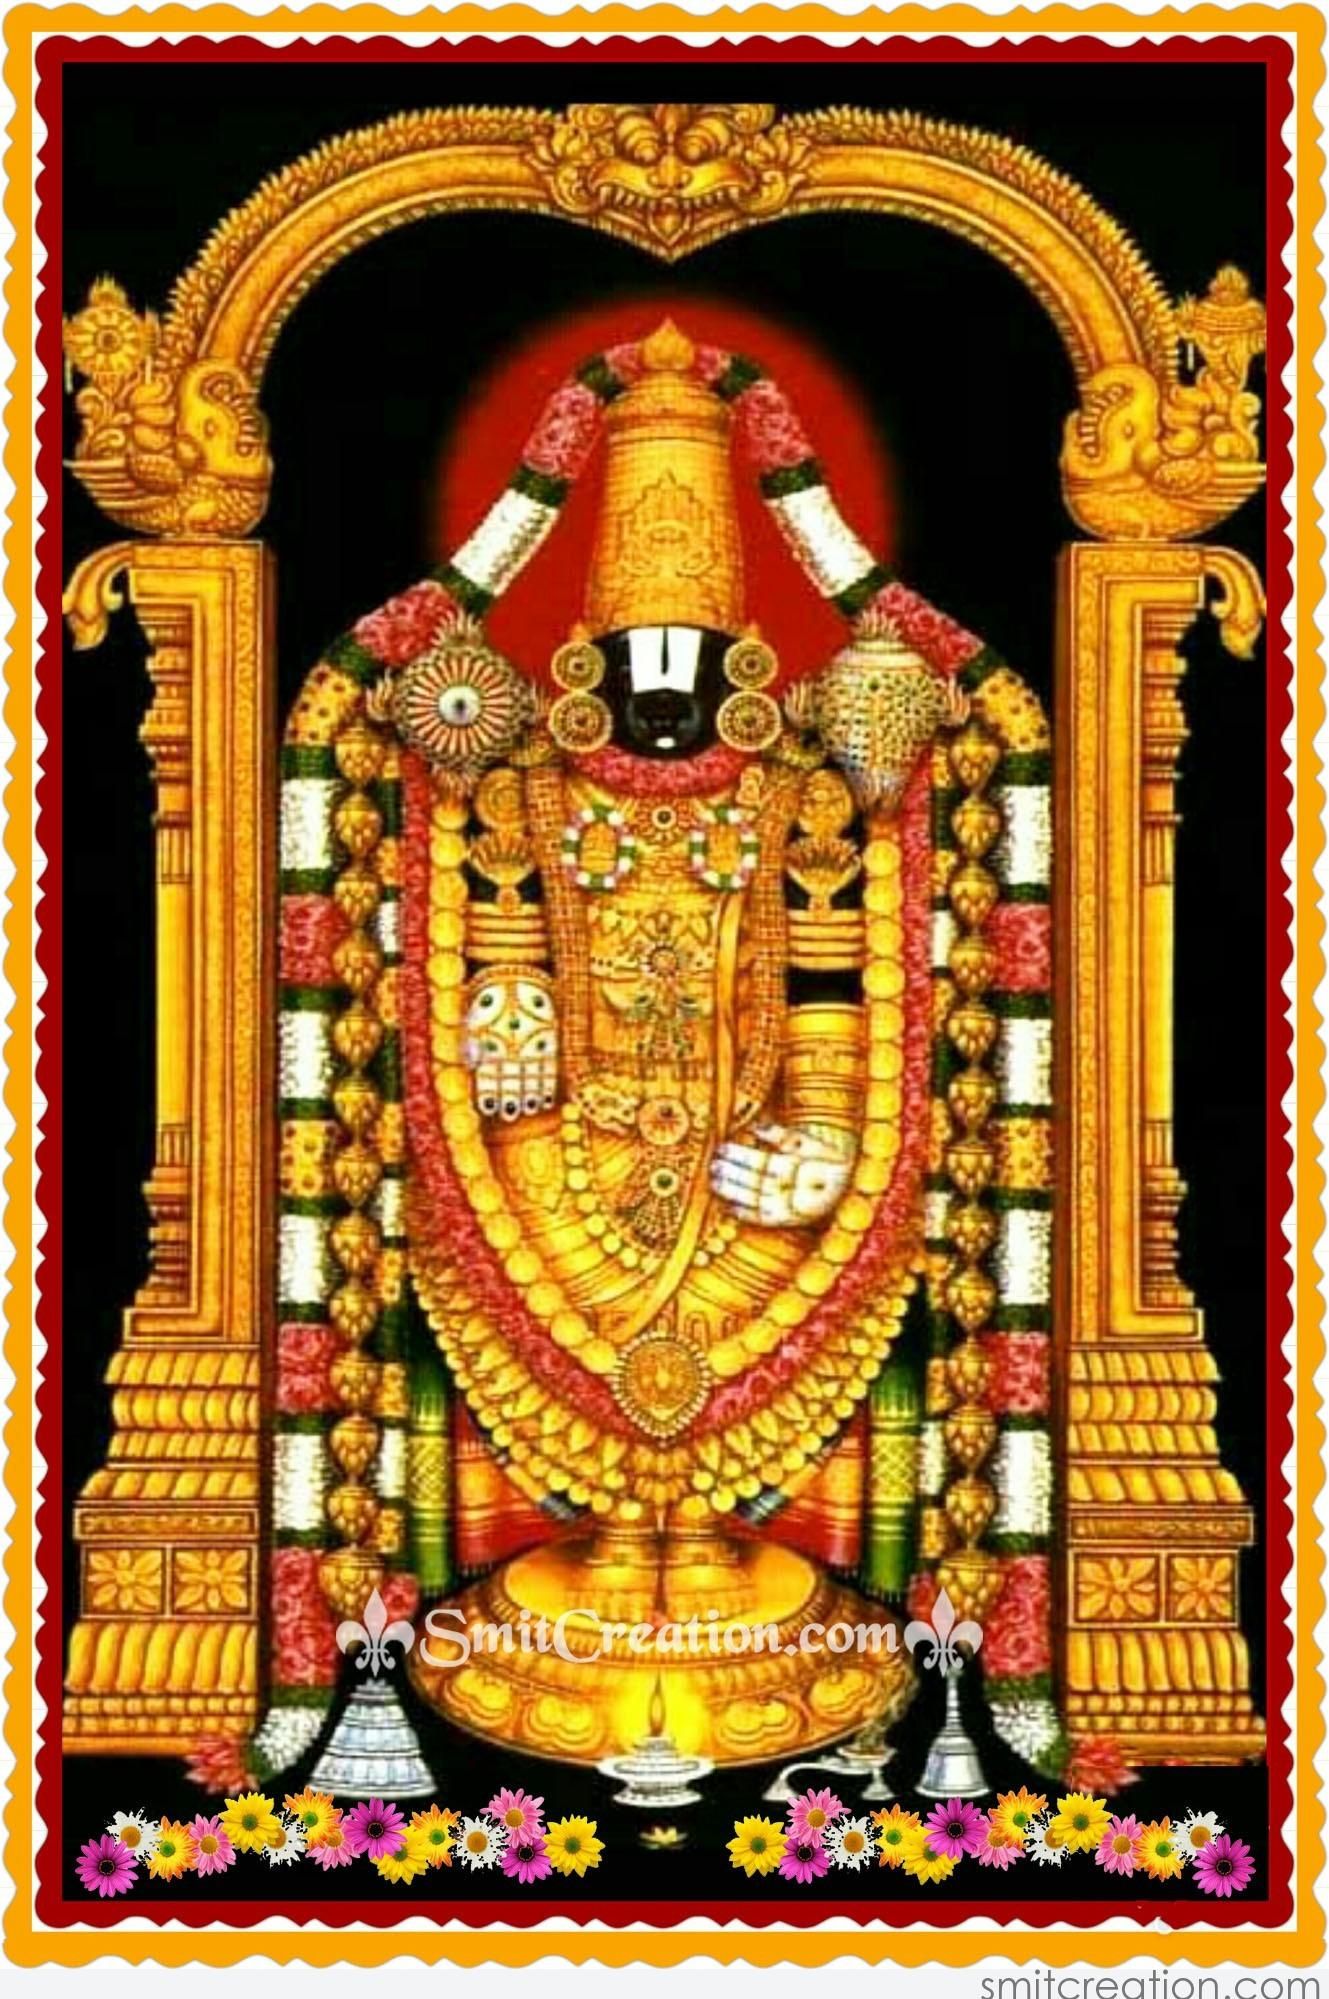 Venkateswara Swamy Photo Free Download. Lord balaji, Lord shiva family, Lord murugan wallpaper